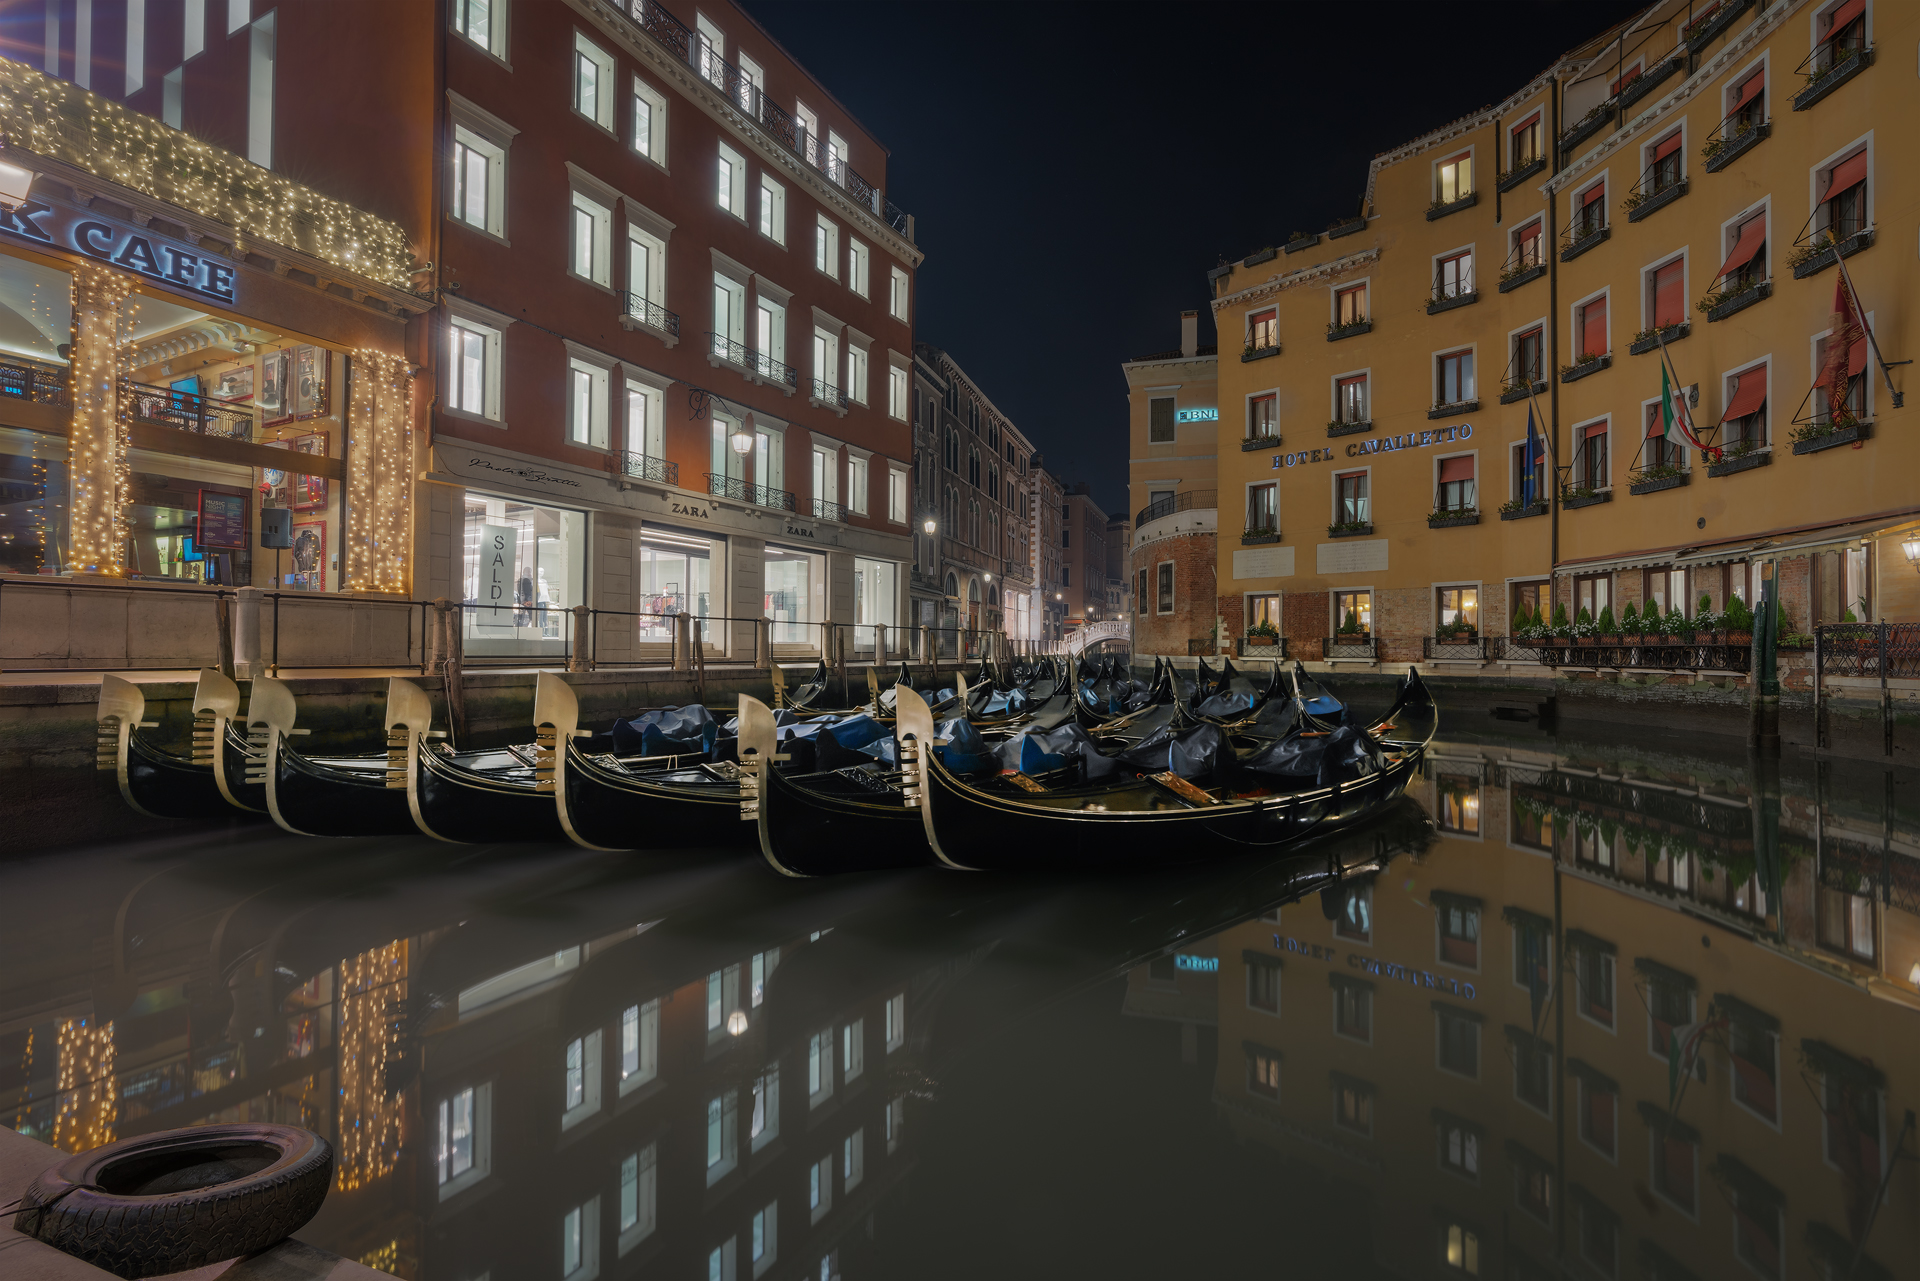 Venice and its gondolas......